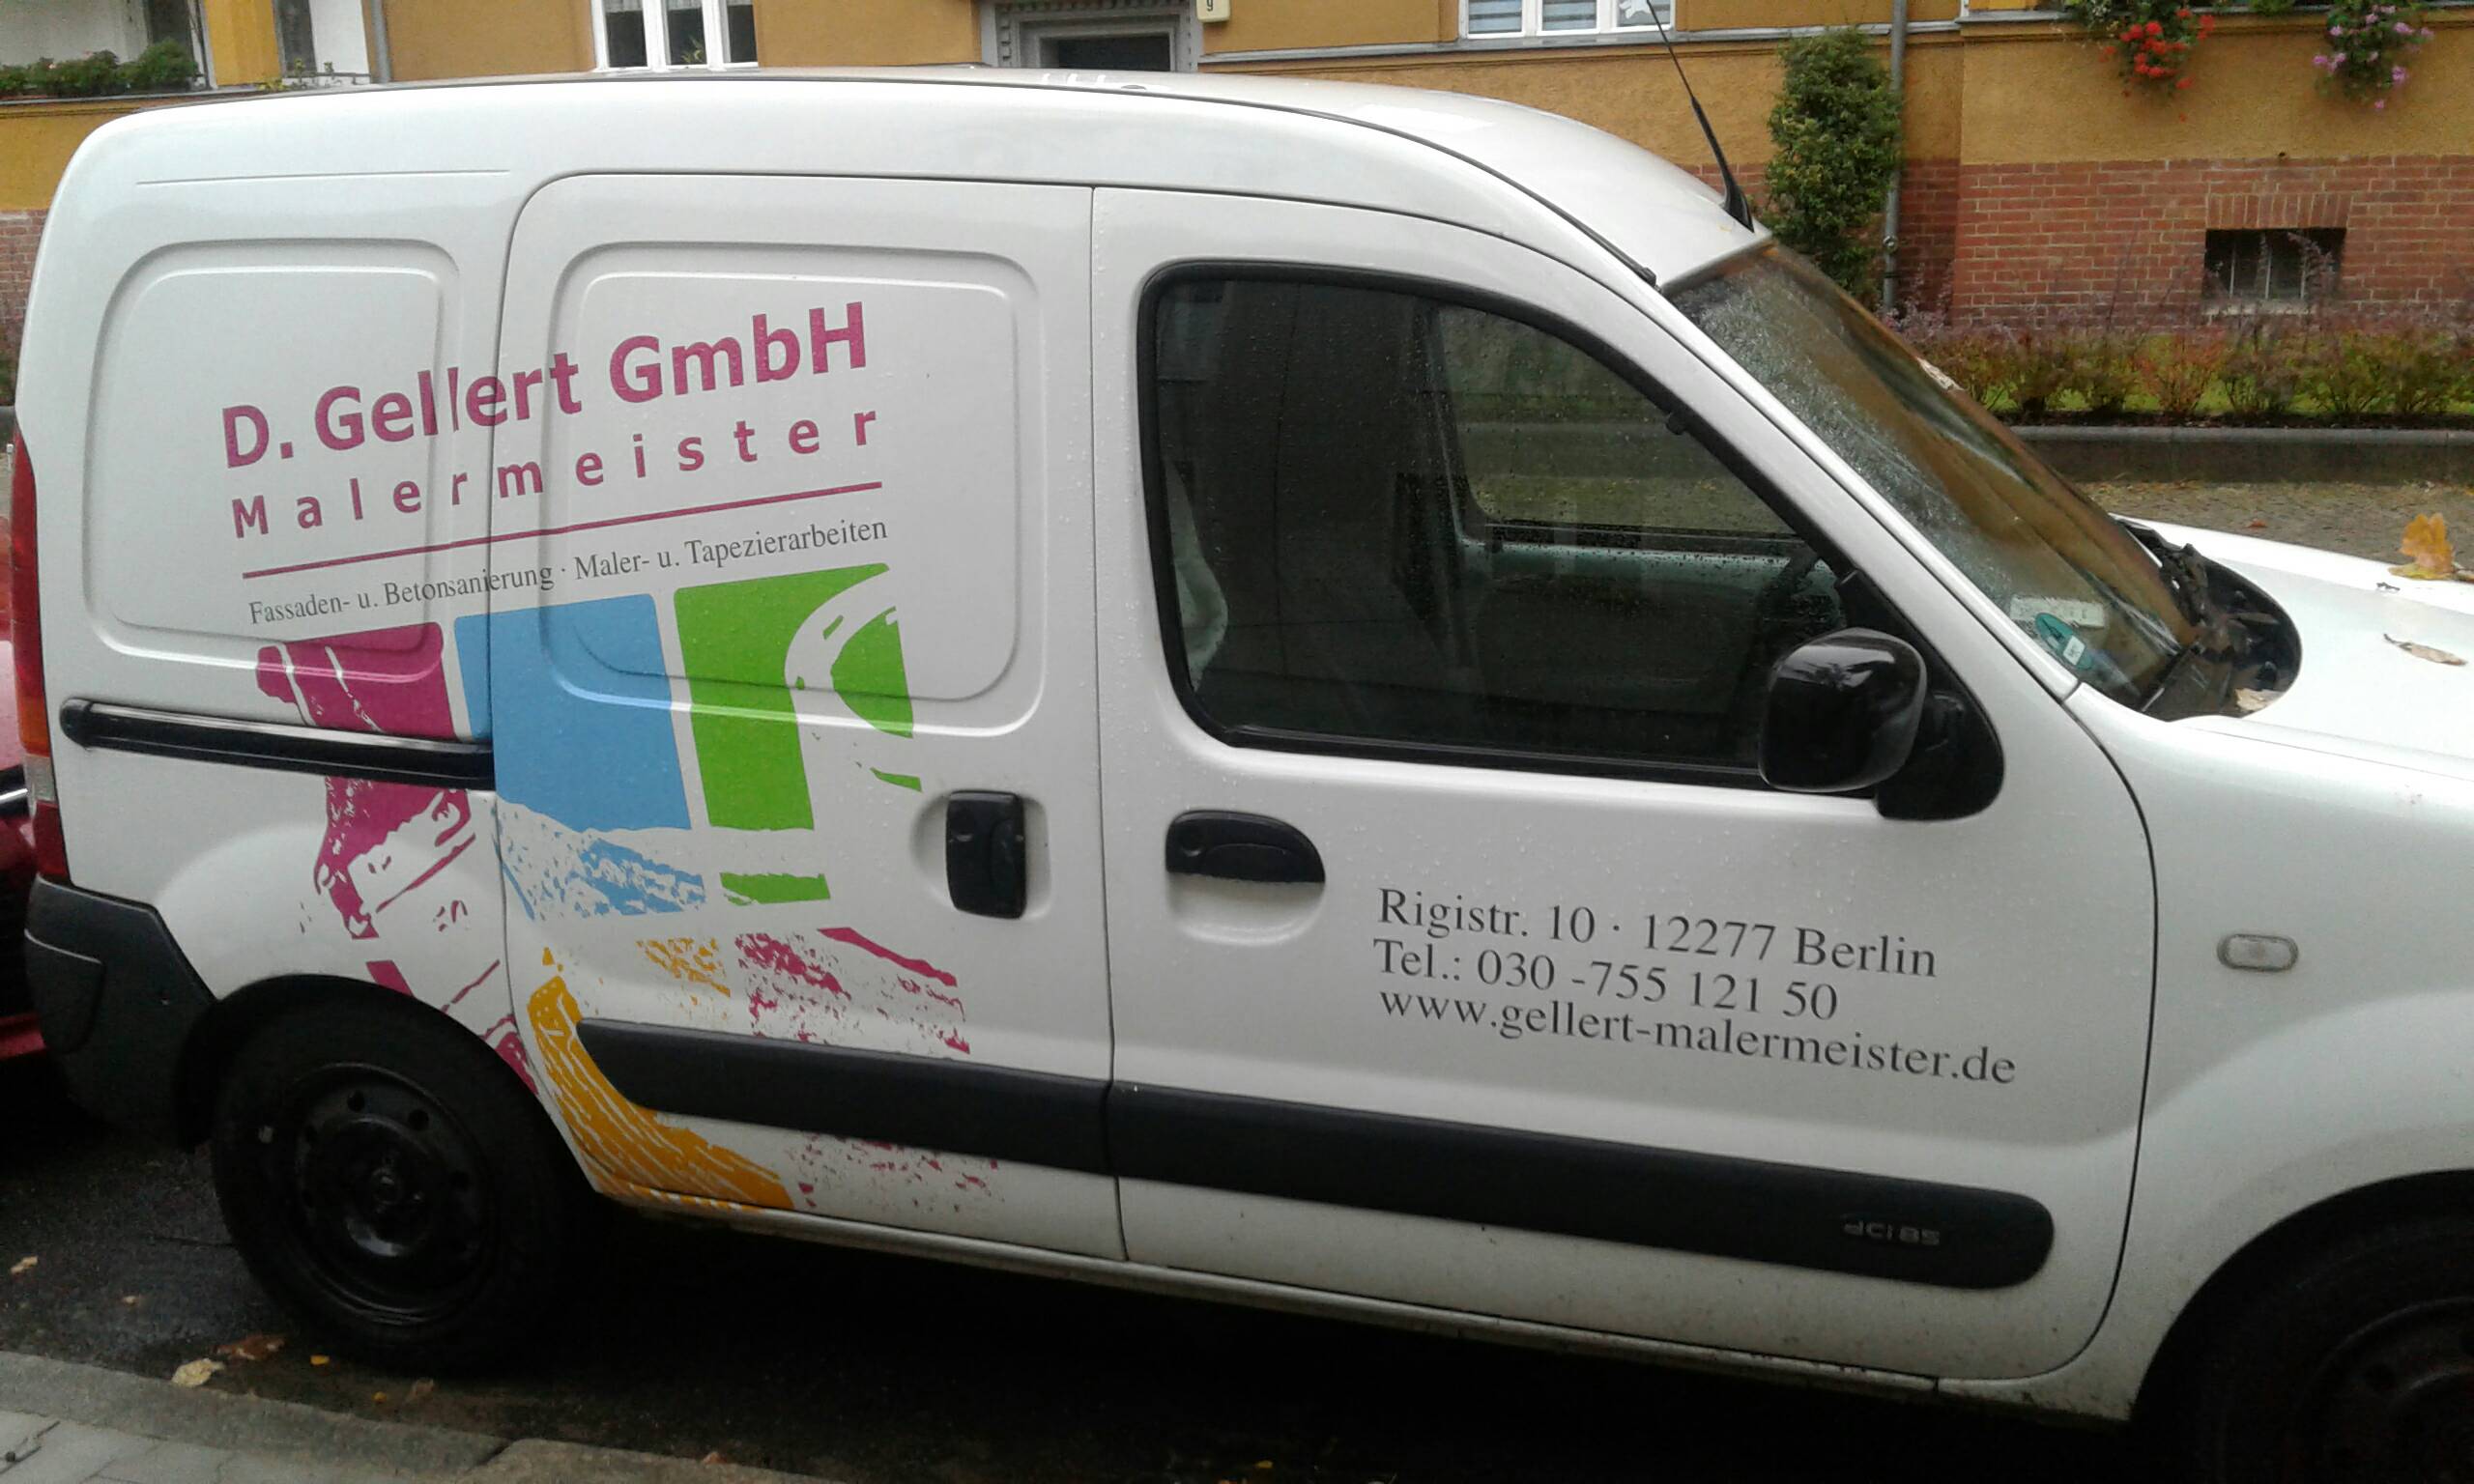 ➤ Gellert GmbH Malermeister, D. 12277 Berlin-Marienfelde Öffnungszeiten | Adresse | Telefon 0